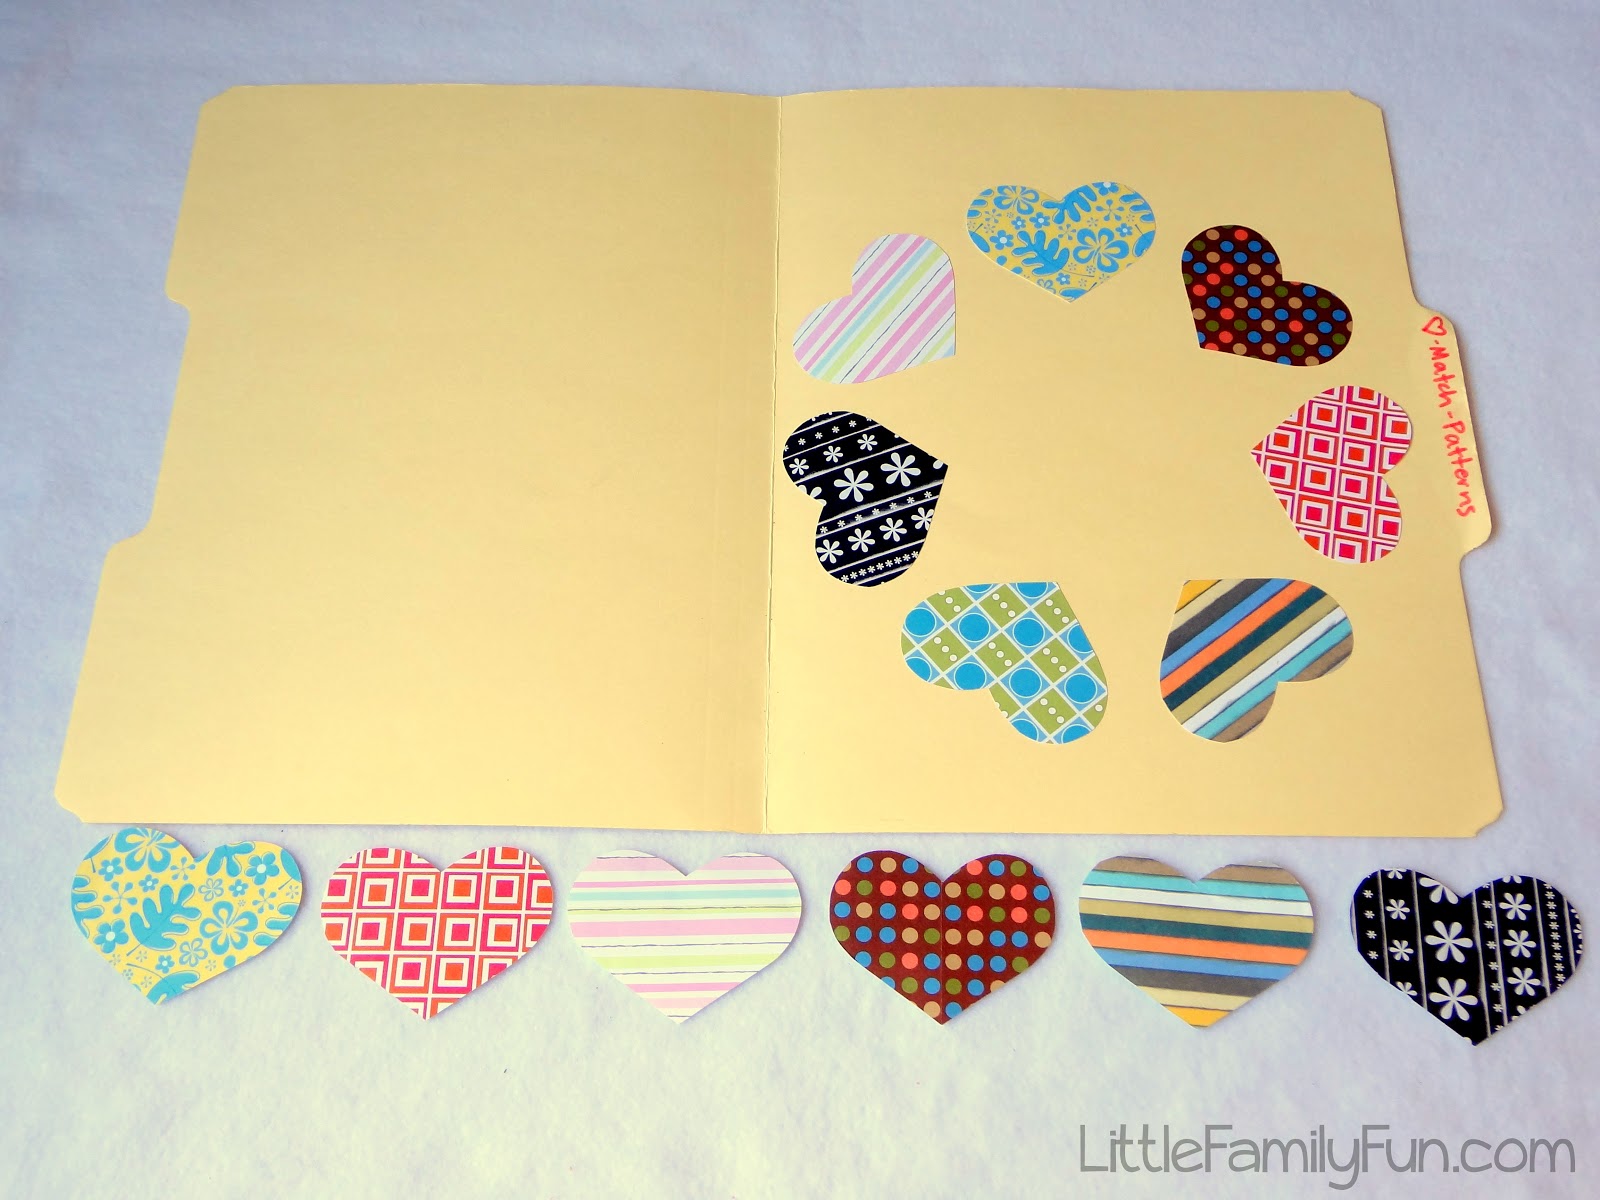 Little Family Fun: Paper Scrap Clover Craft